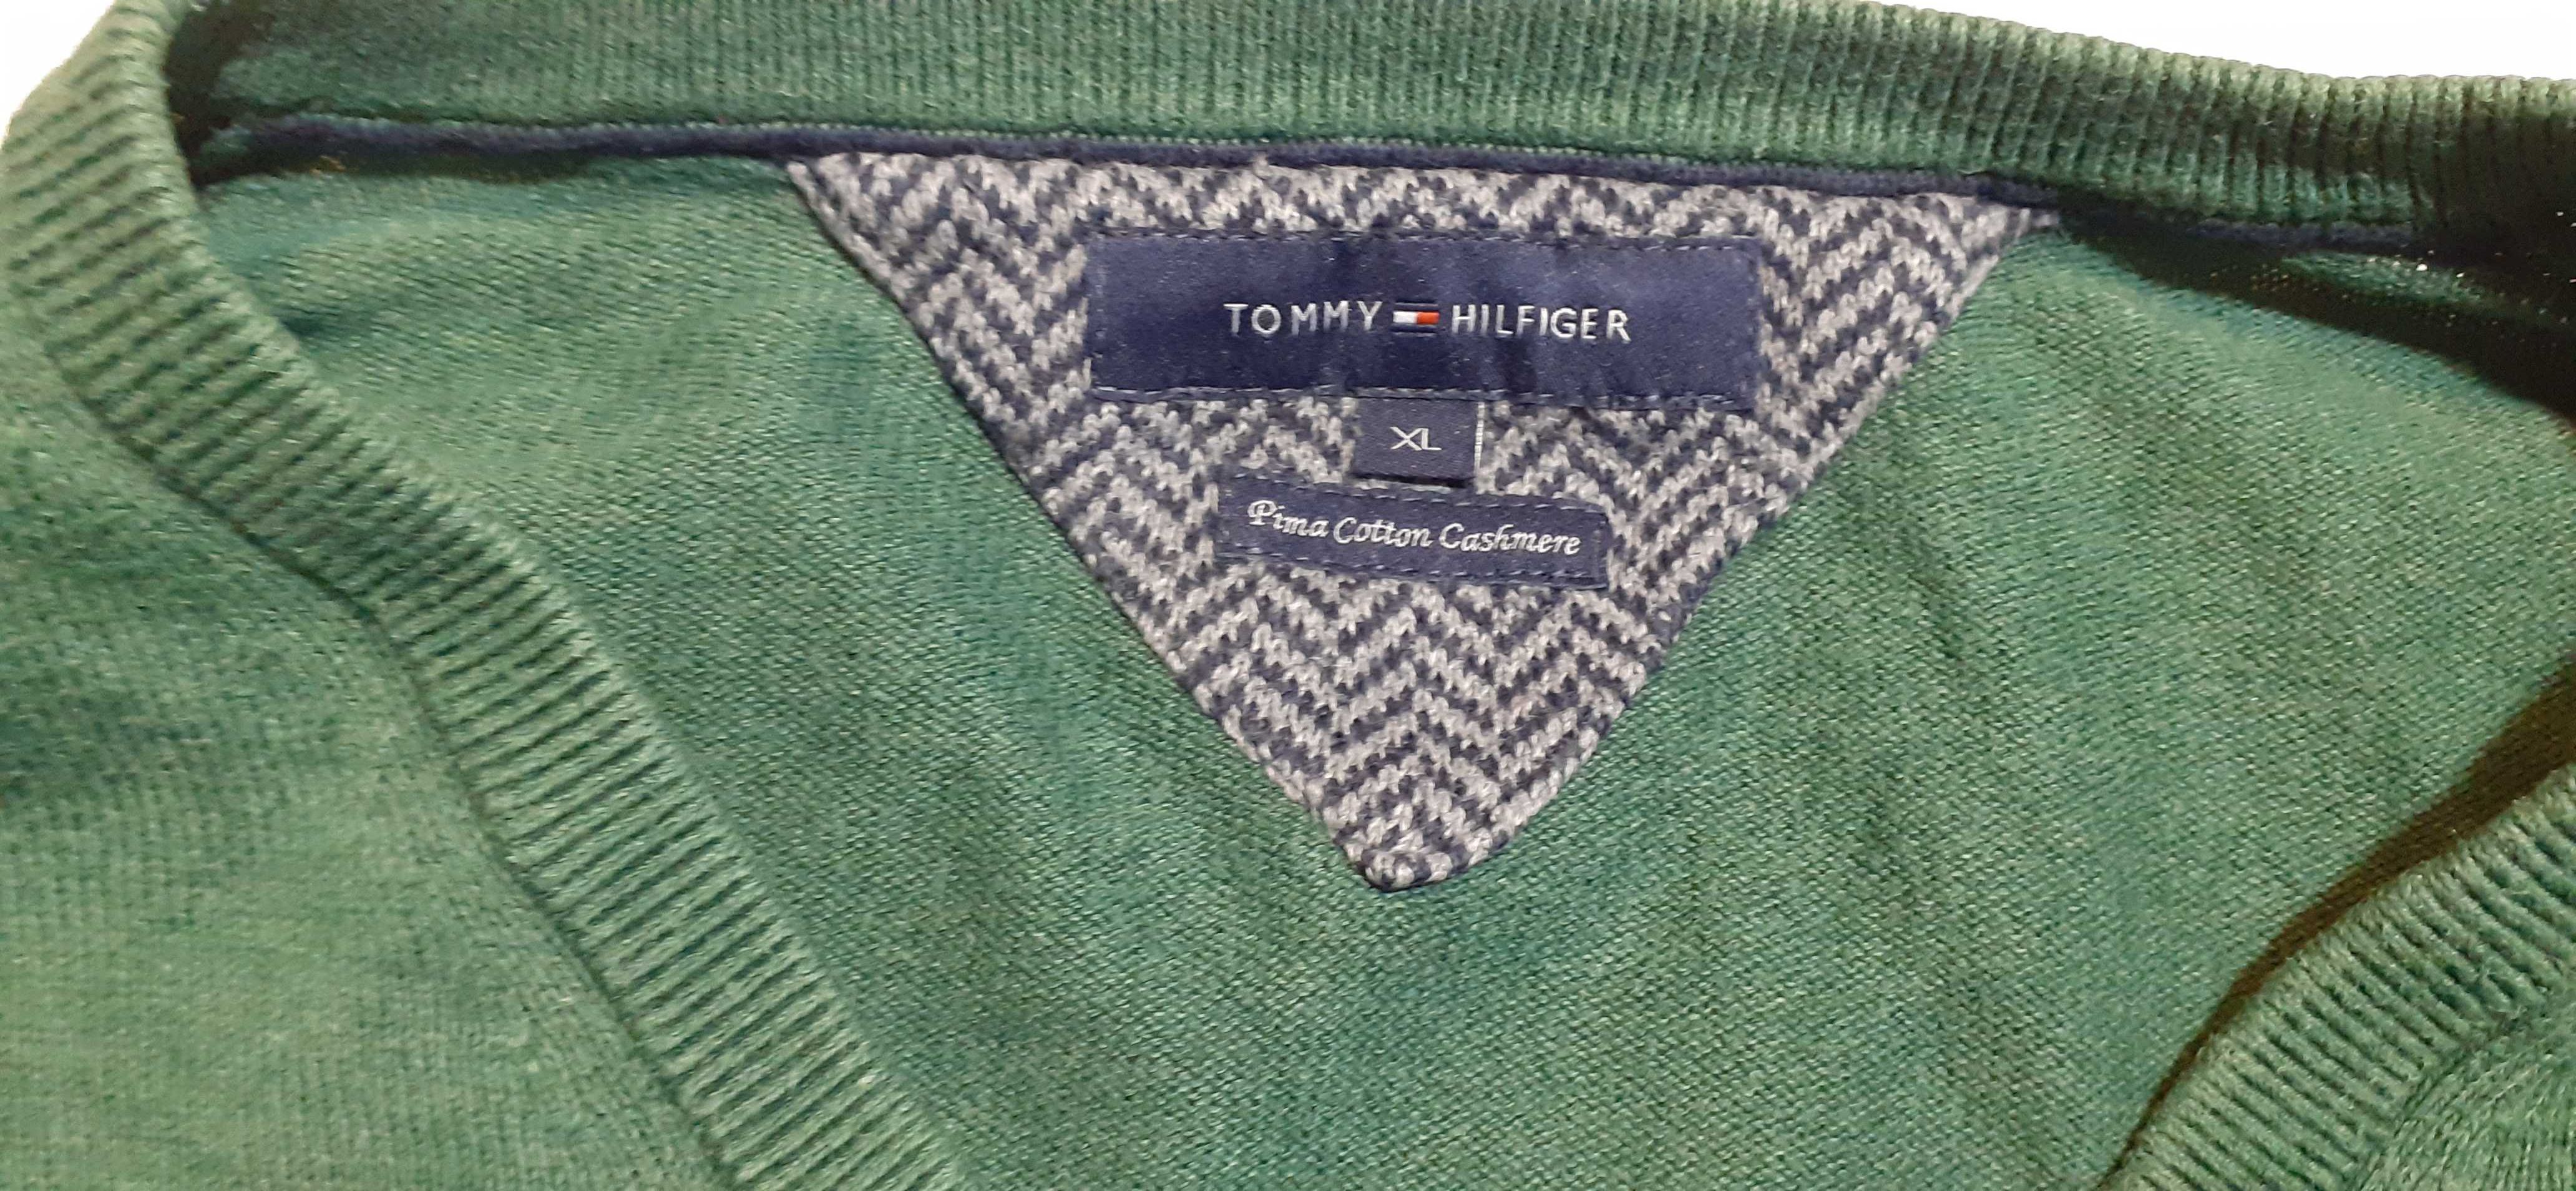 TOMMY HILFIGER XL sweter pima cotton casmere męski